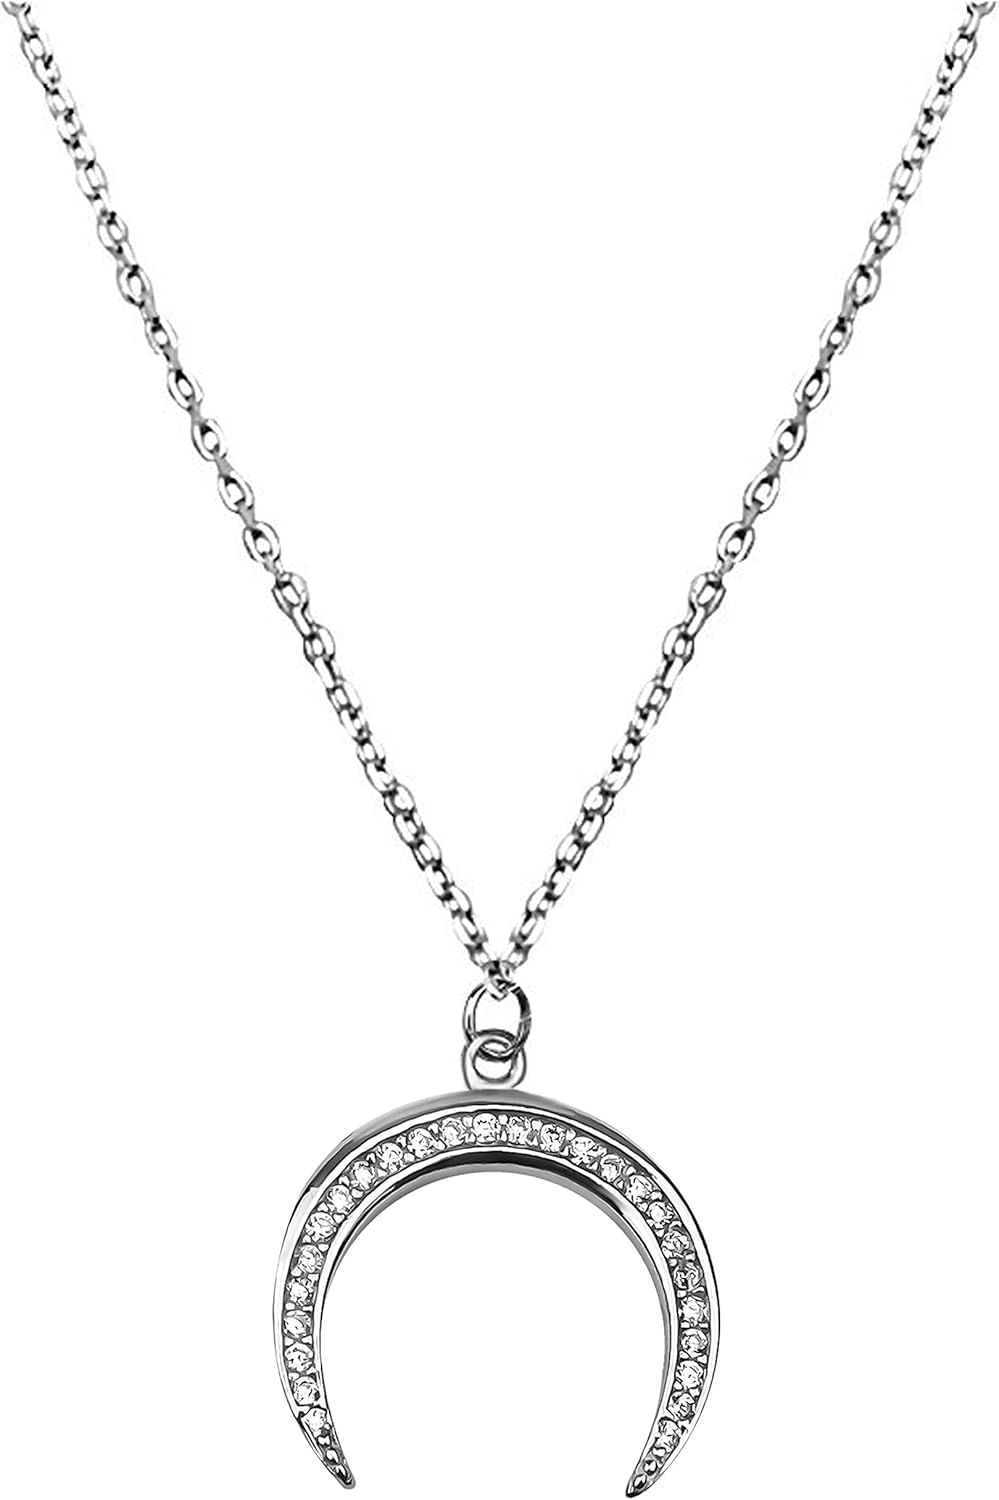 Sofia Milani - Women's Necklace 925 Silver - with Zirconia Stones - Moon Pendant - 50226 | Amazon (US)